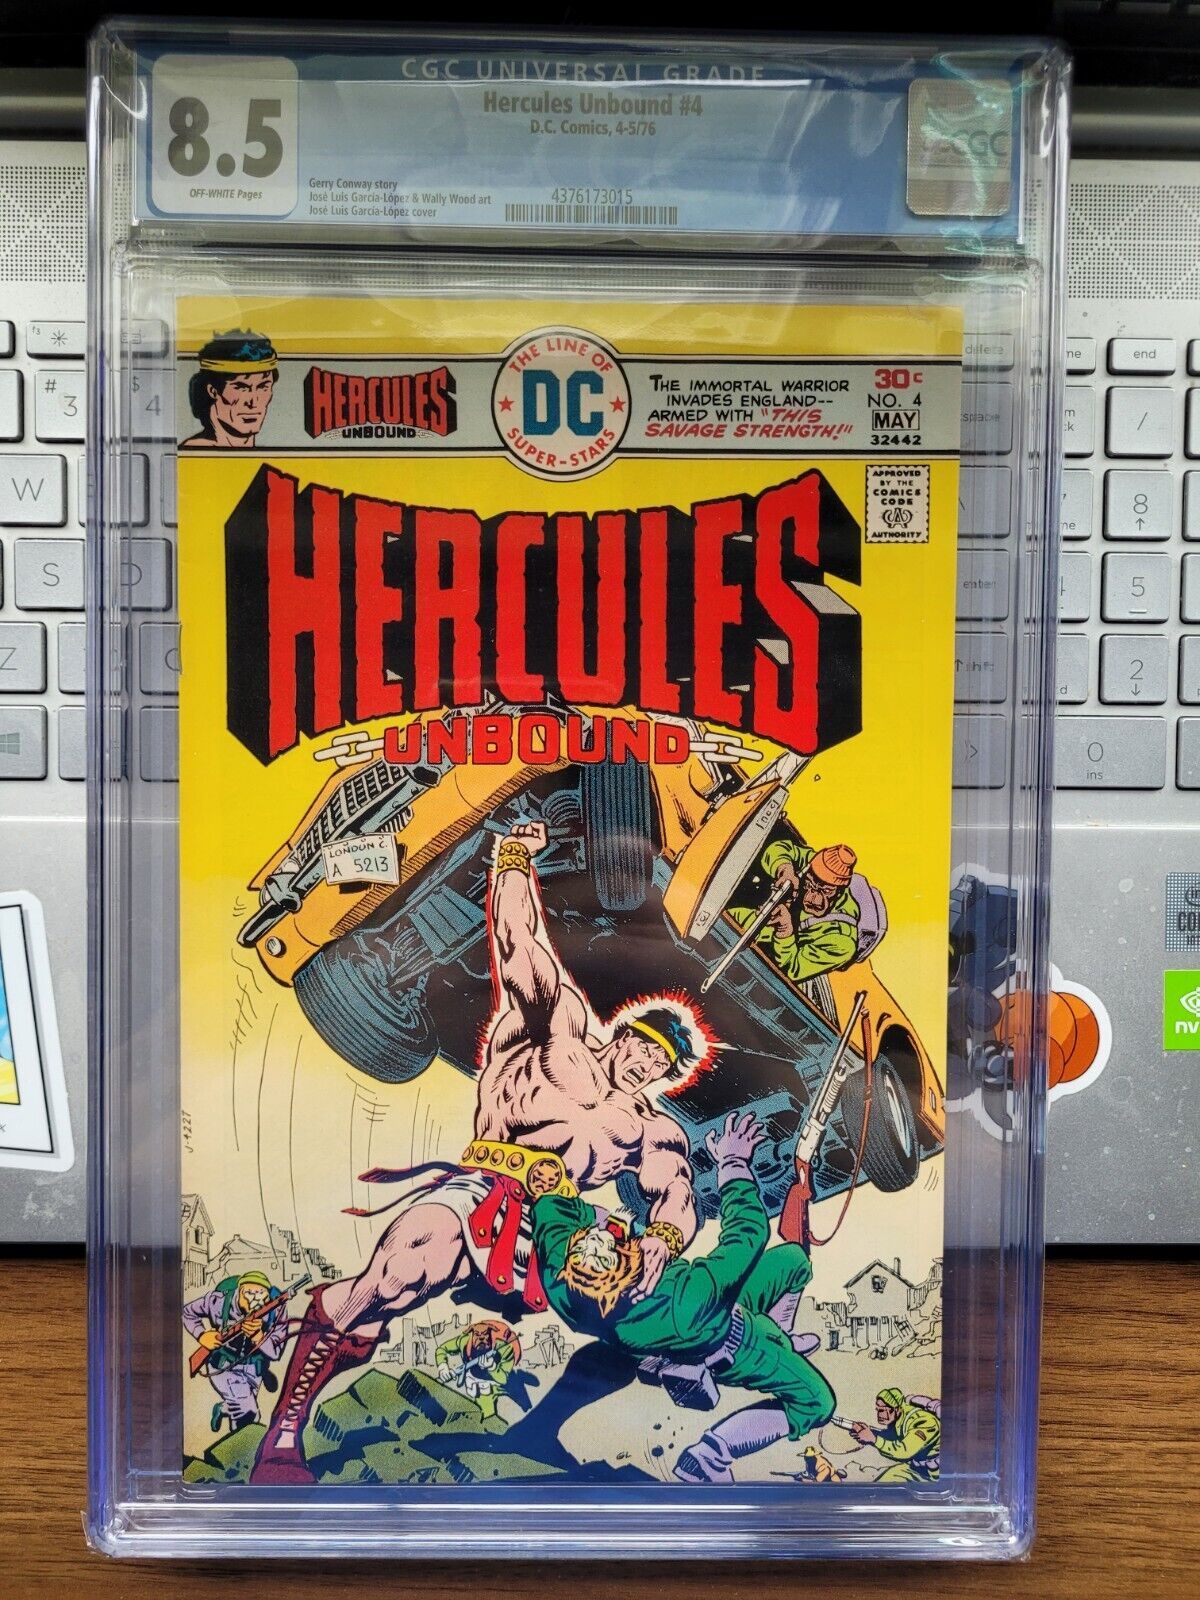 Hercules Unbound #4 DC Comics Comic Book